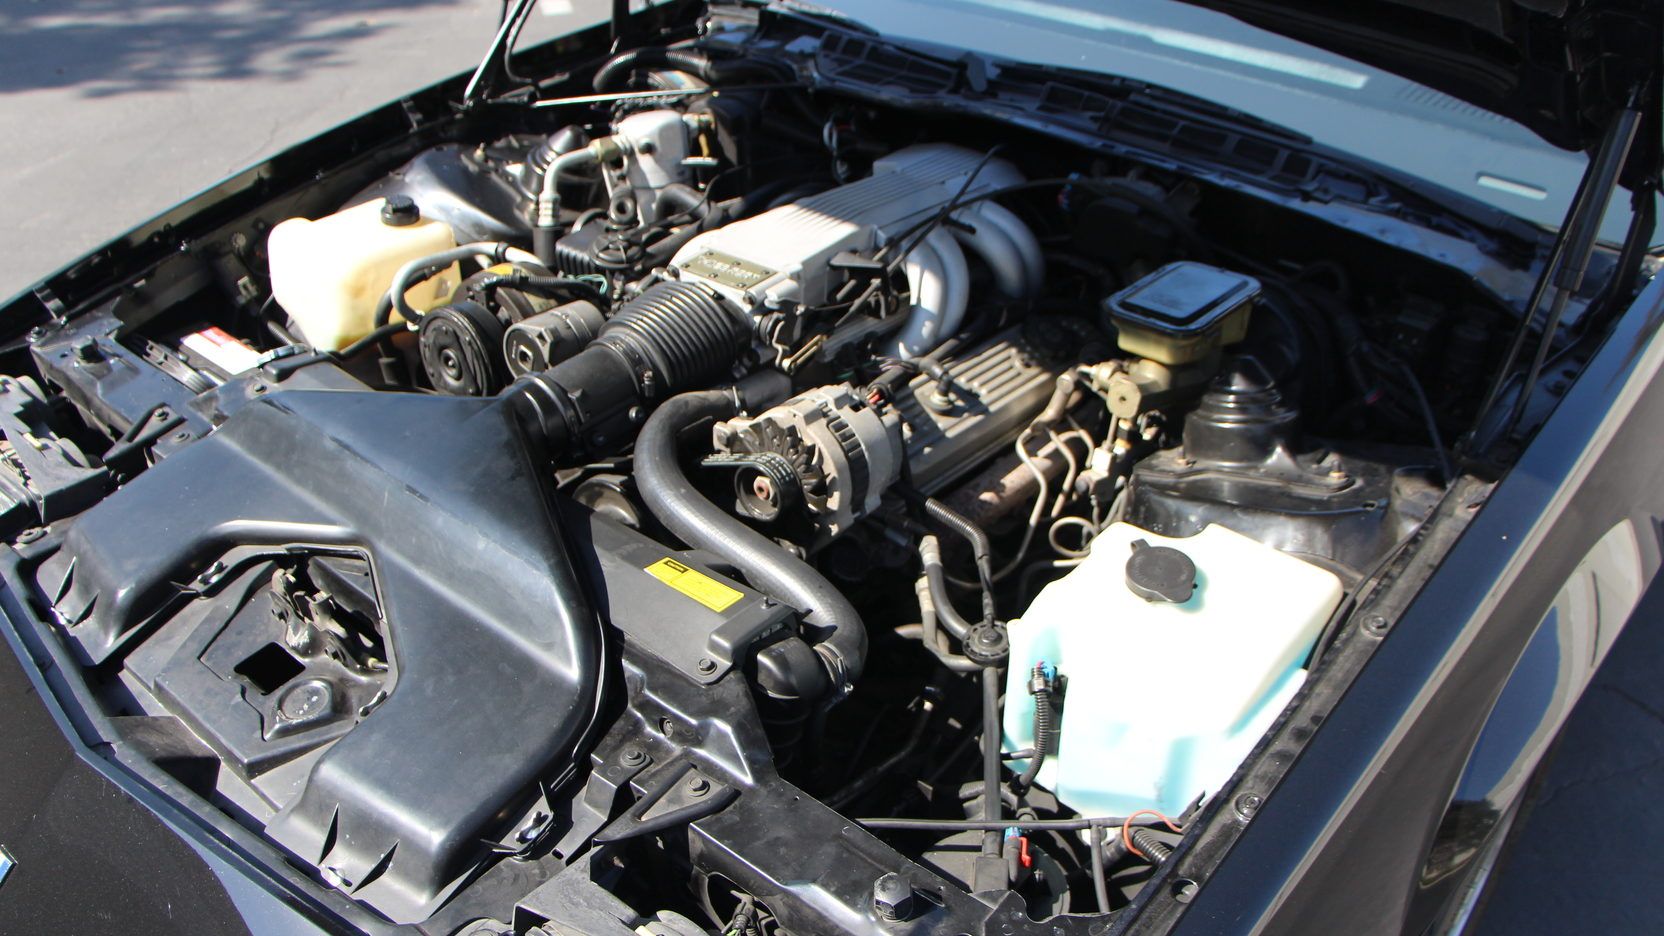 A parked 1988 Chevy Camaro Iroc-Z engine